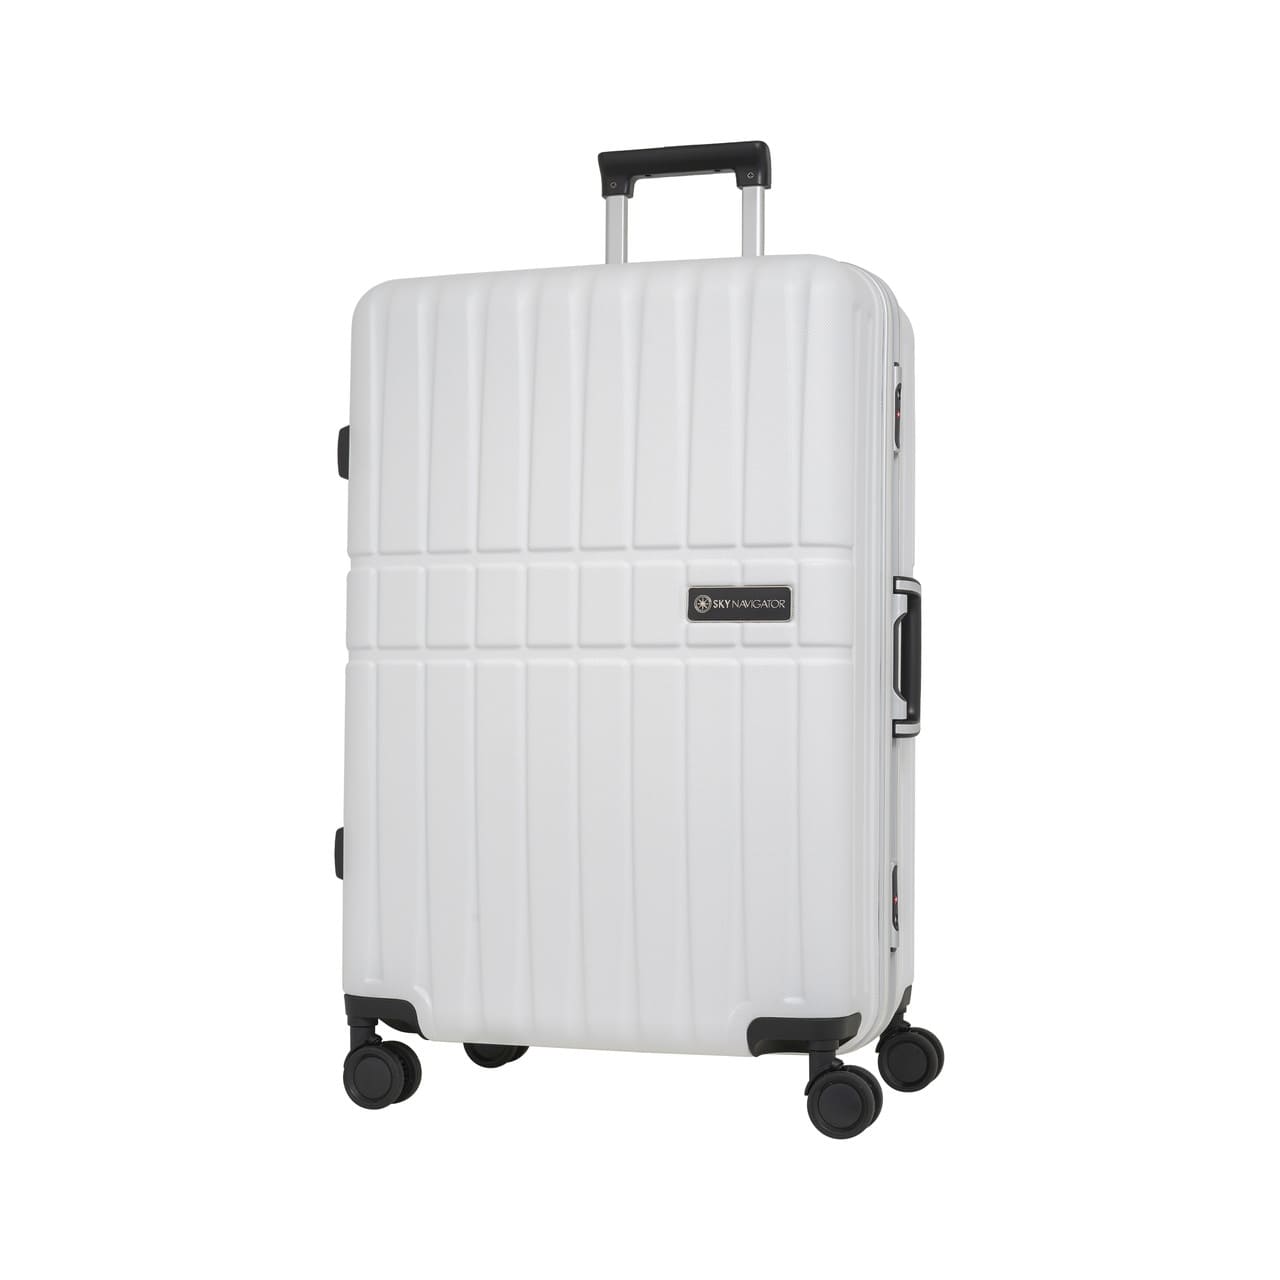 SKYNAVIGATORのスーツケースSK-0850-69のホワイトの正面振り画像